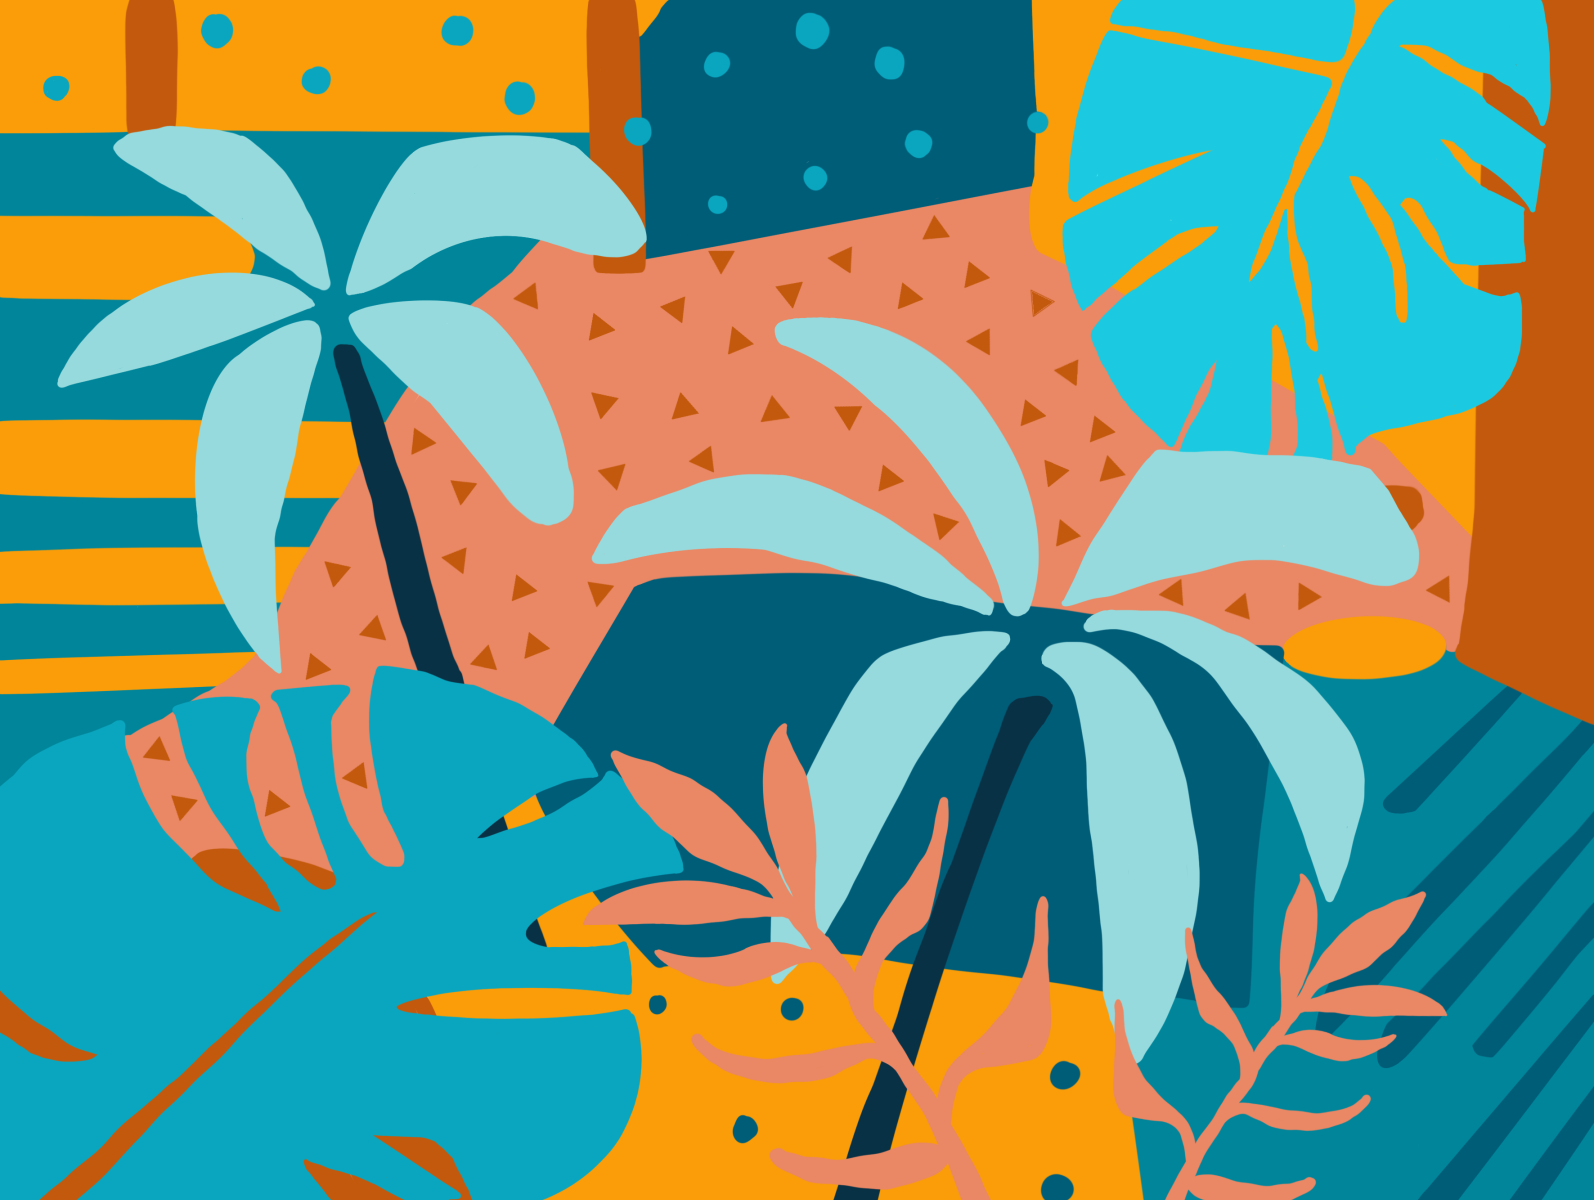 Palm pattern by Saranda Hofstra on Dribbble